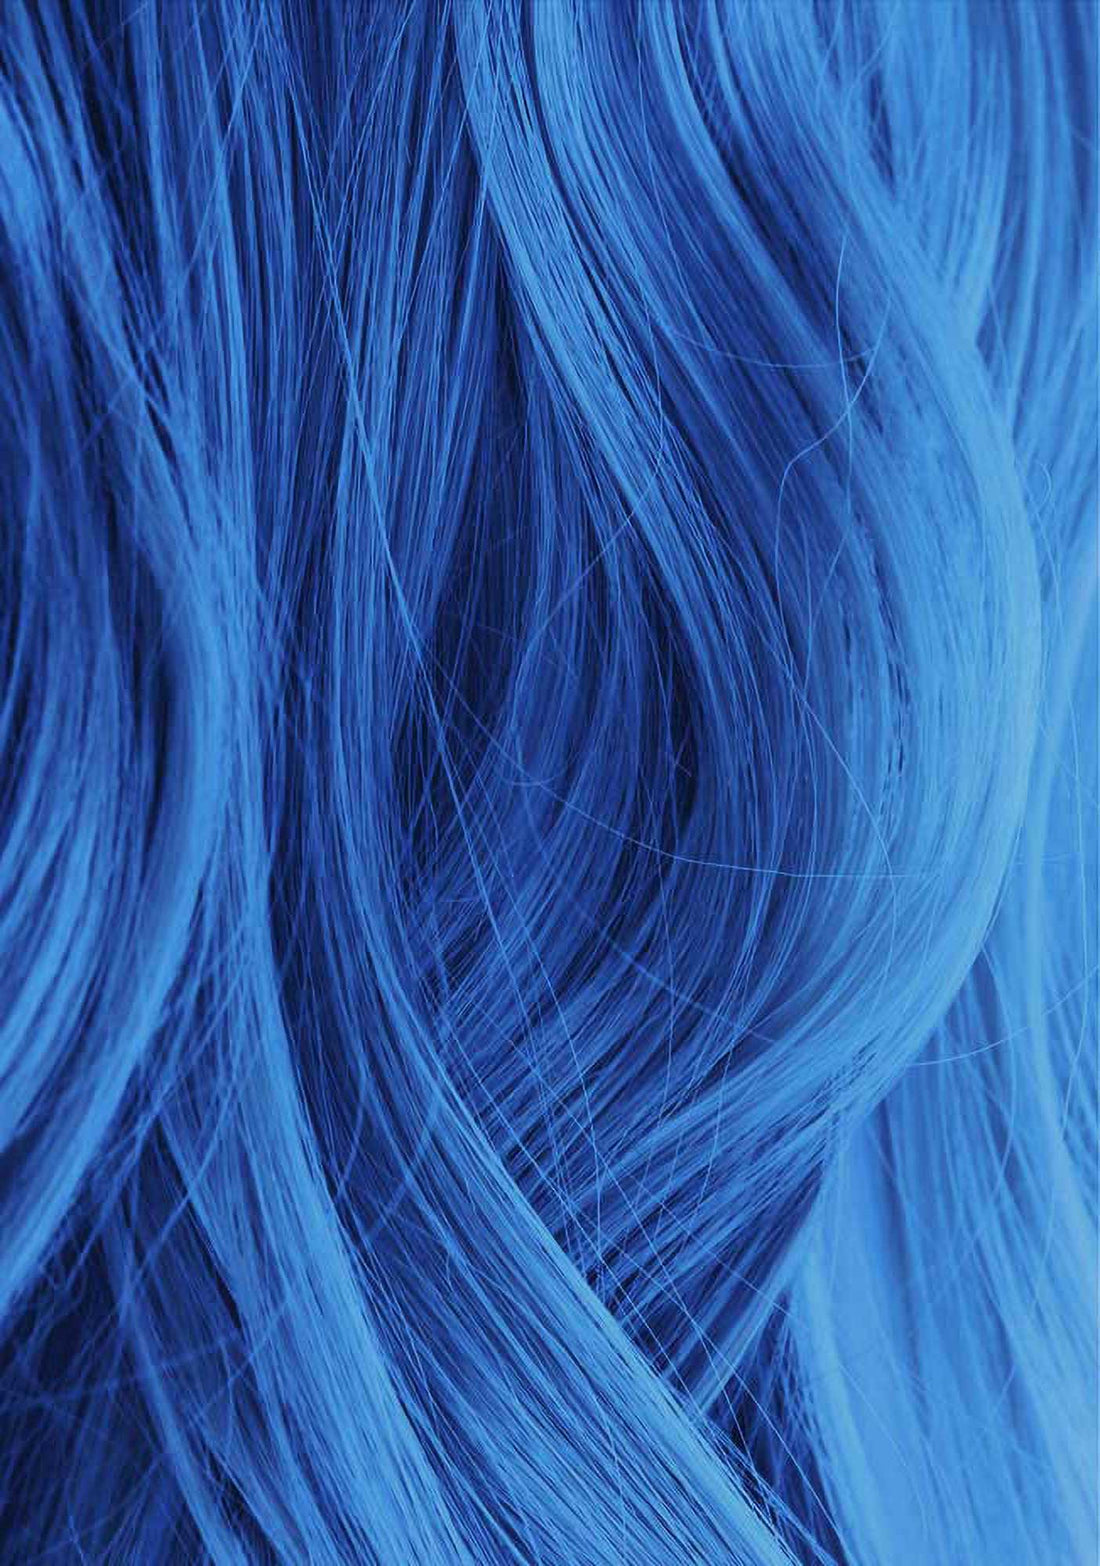 Hair Color - Iroiro 60 Light Blue Natural Vegan Cruelty-Free Semi-Permanent Hair Color